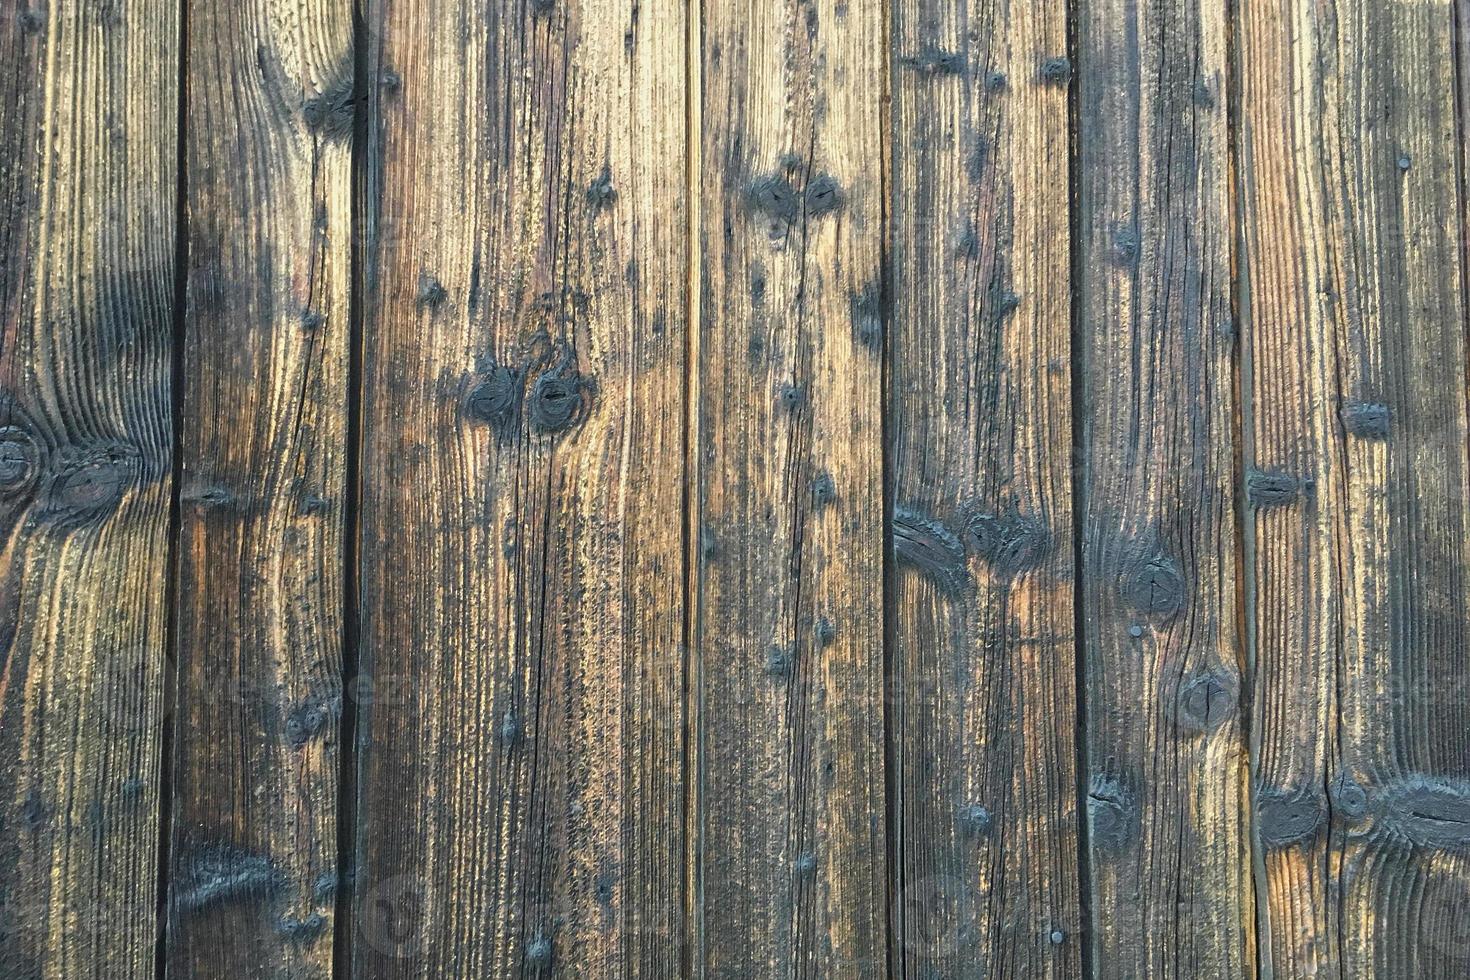 Grunge wood pattern texture, wooden planks photo